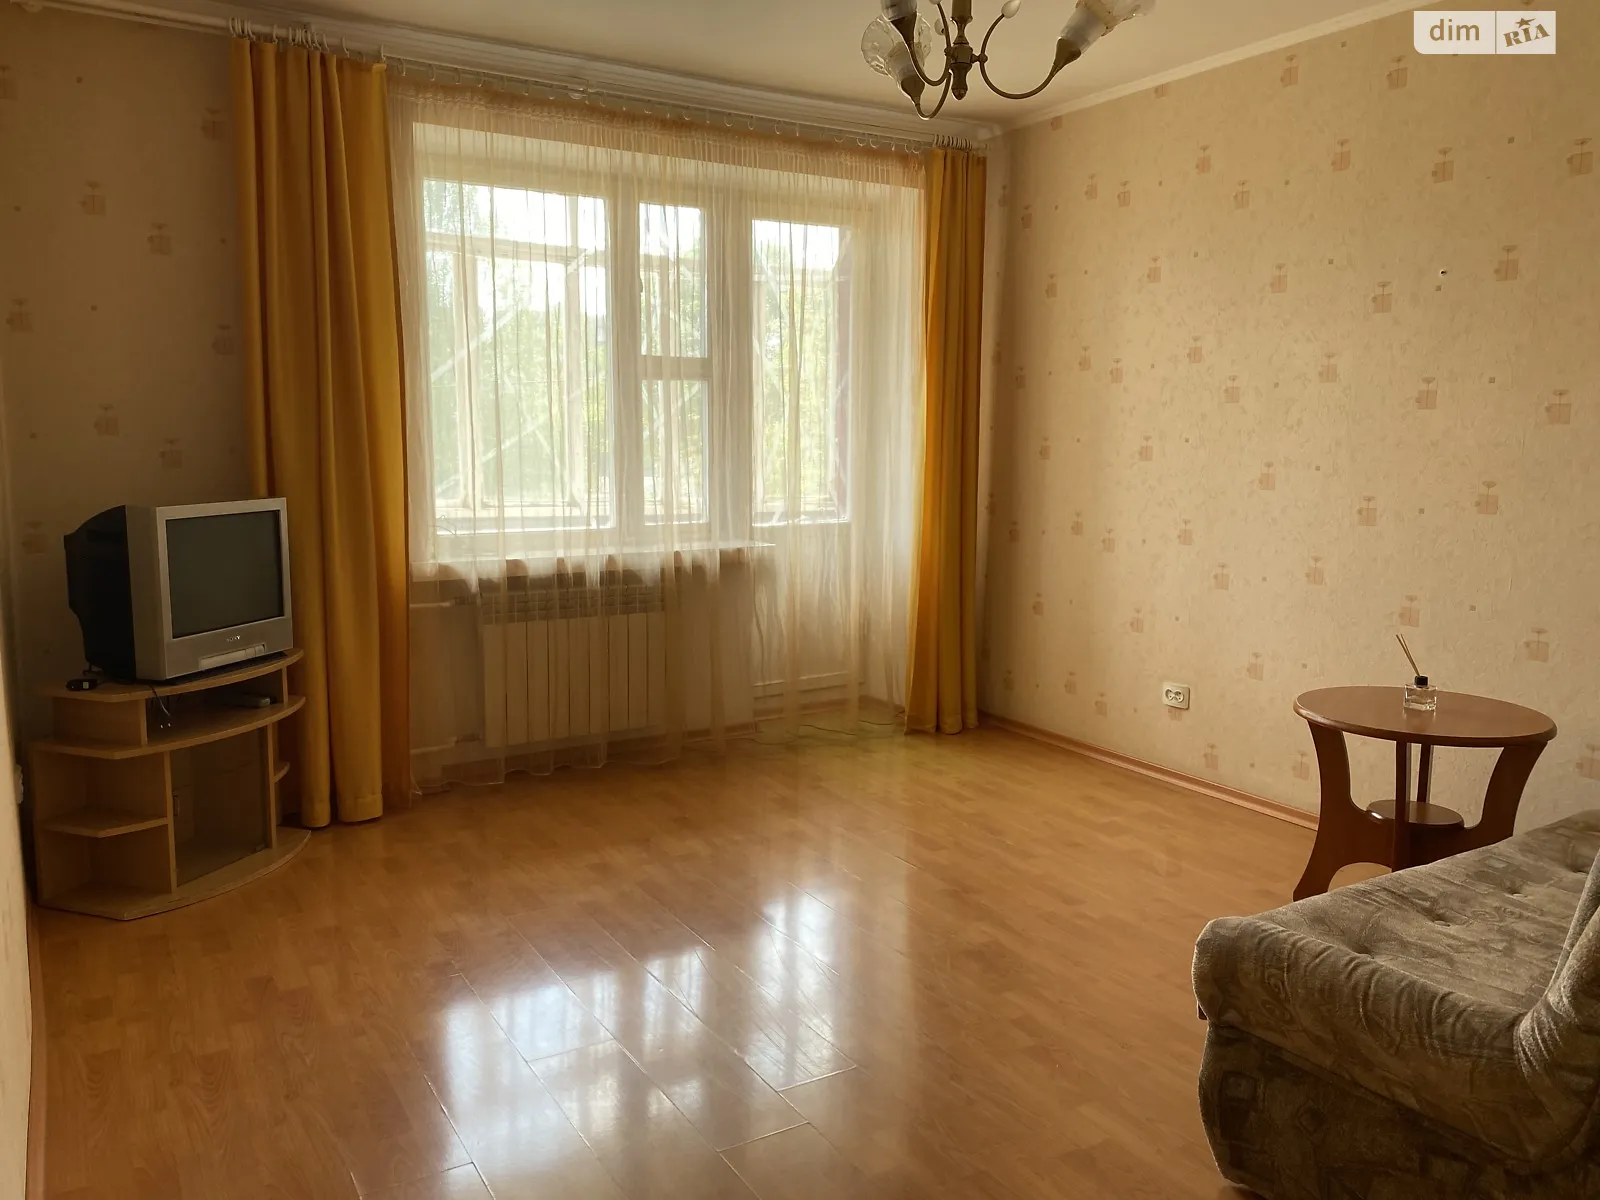 1-кімнатна квартира 34.4 кв. м у Луцьку